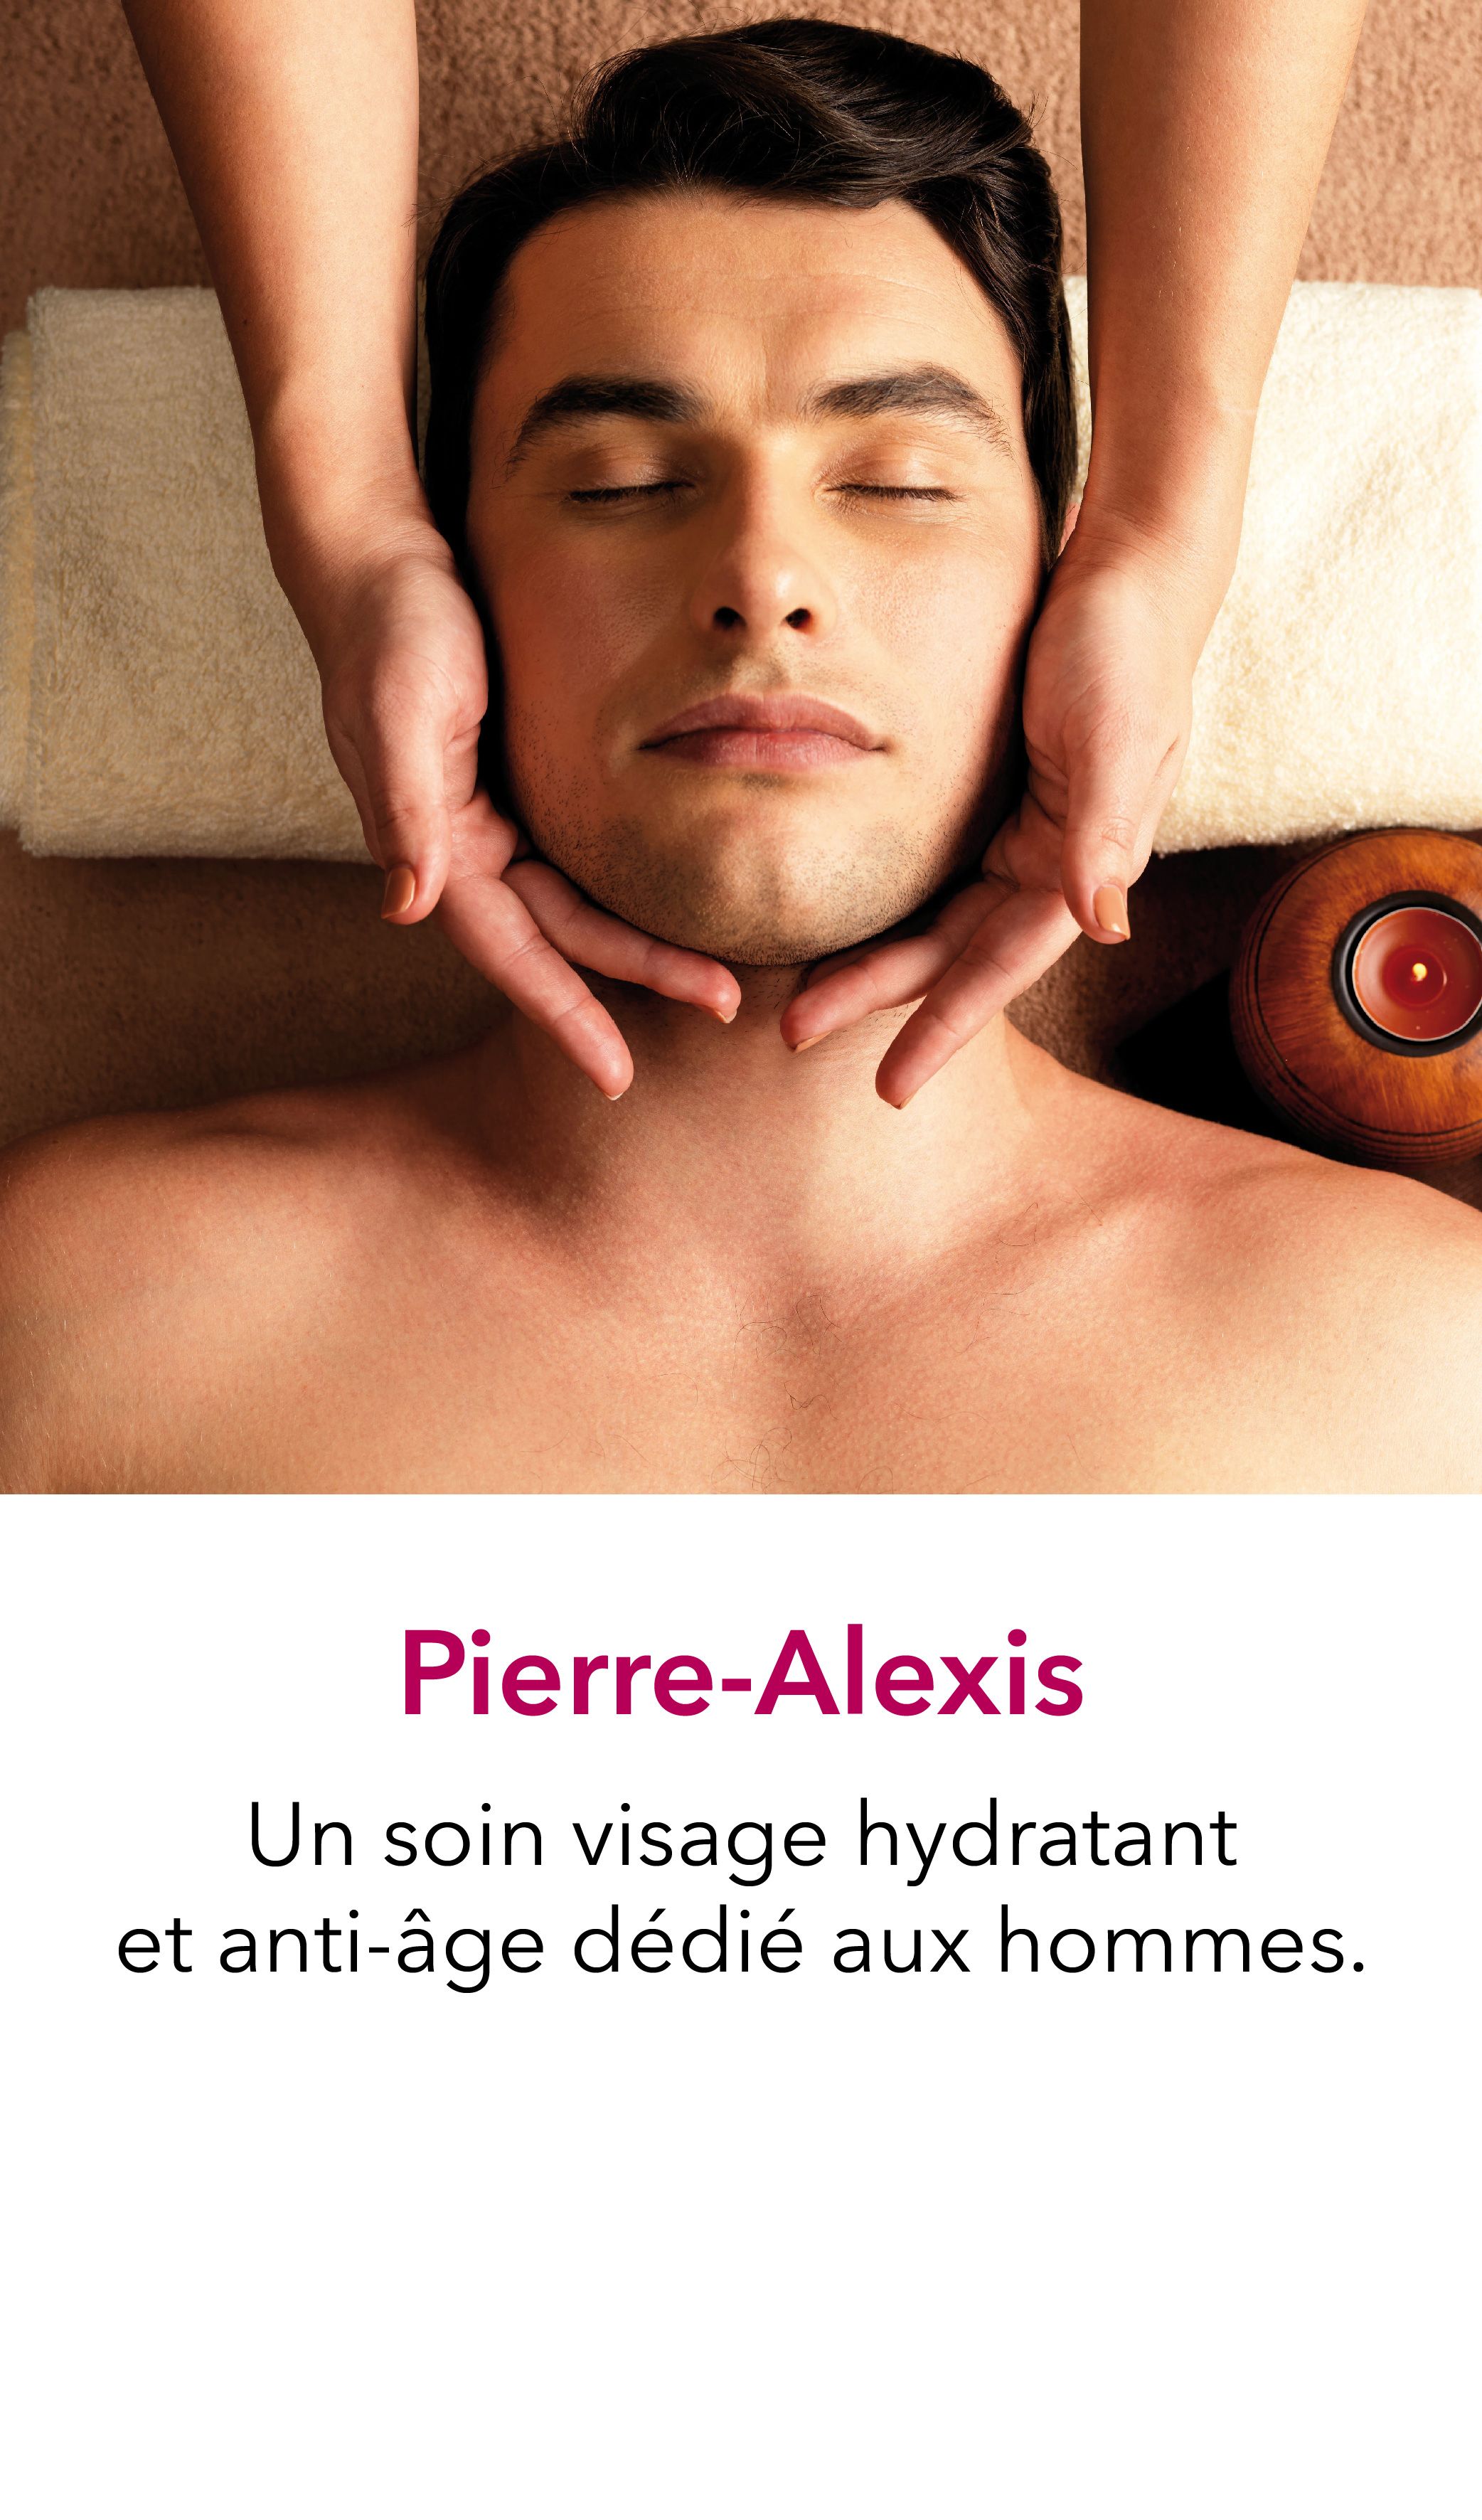 Le soin visage Pierre-Alexis